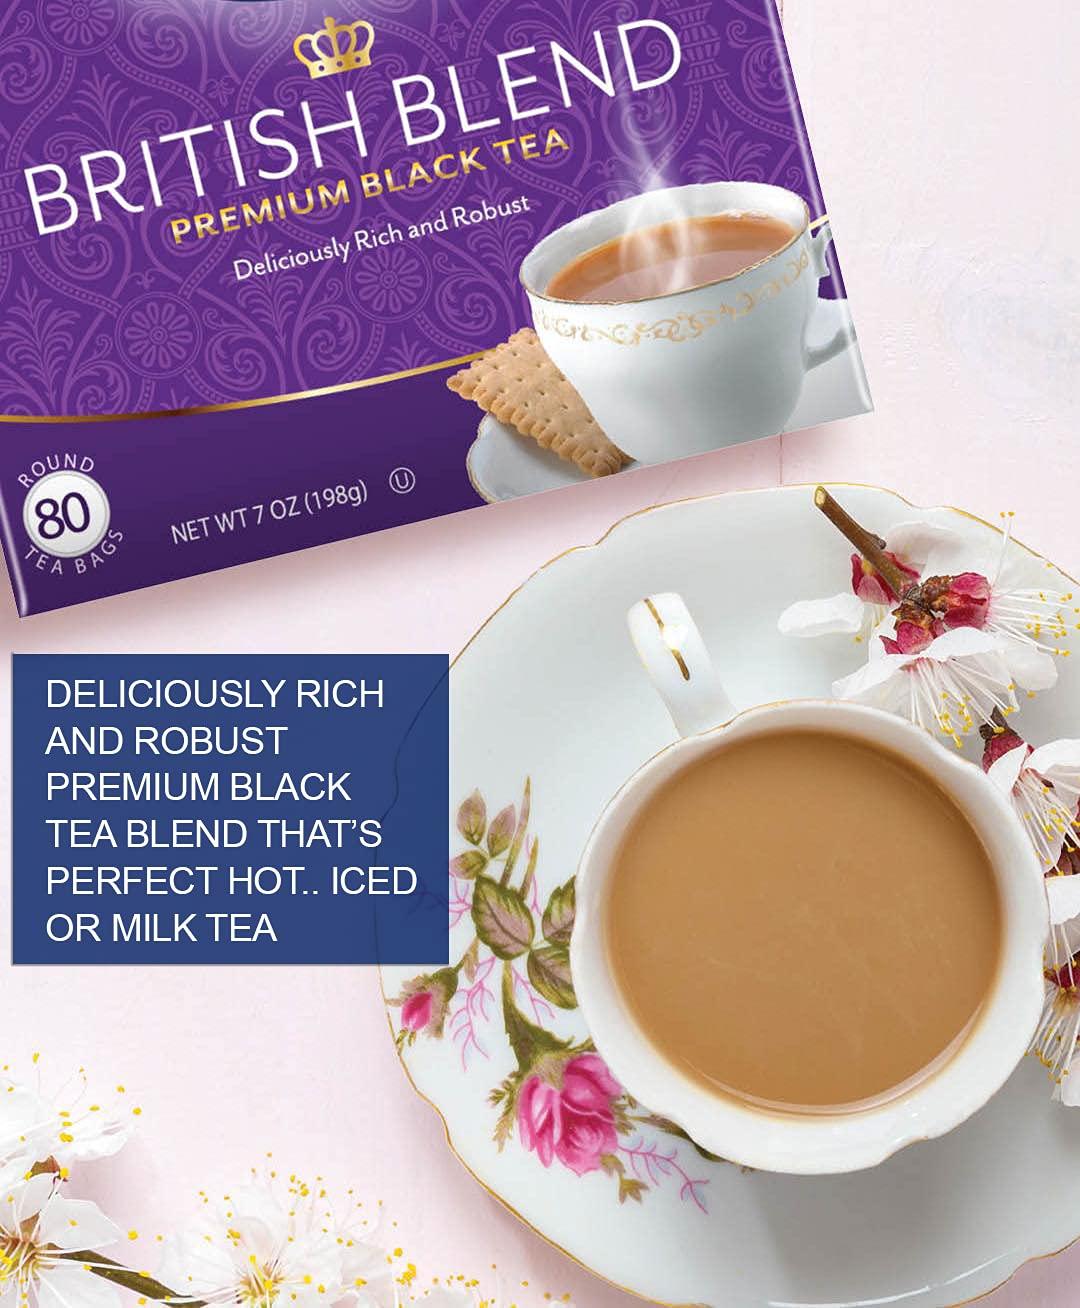 Tetley Classic Blend Rich Black Tea Bags - 100 ct box